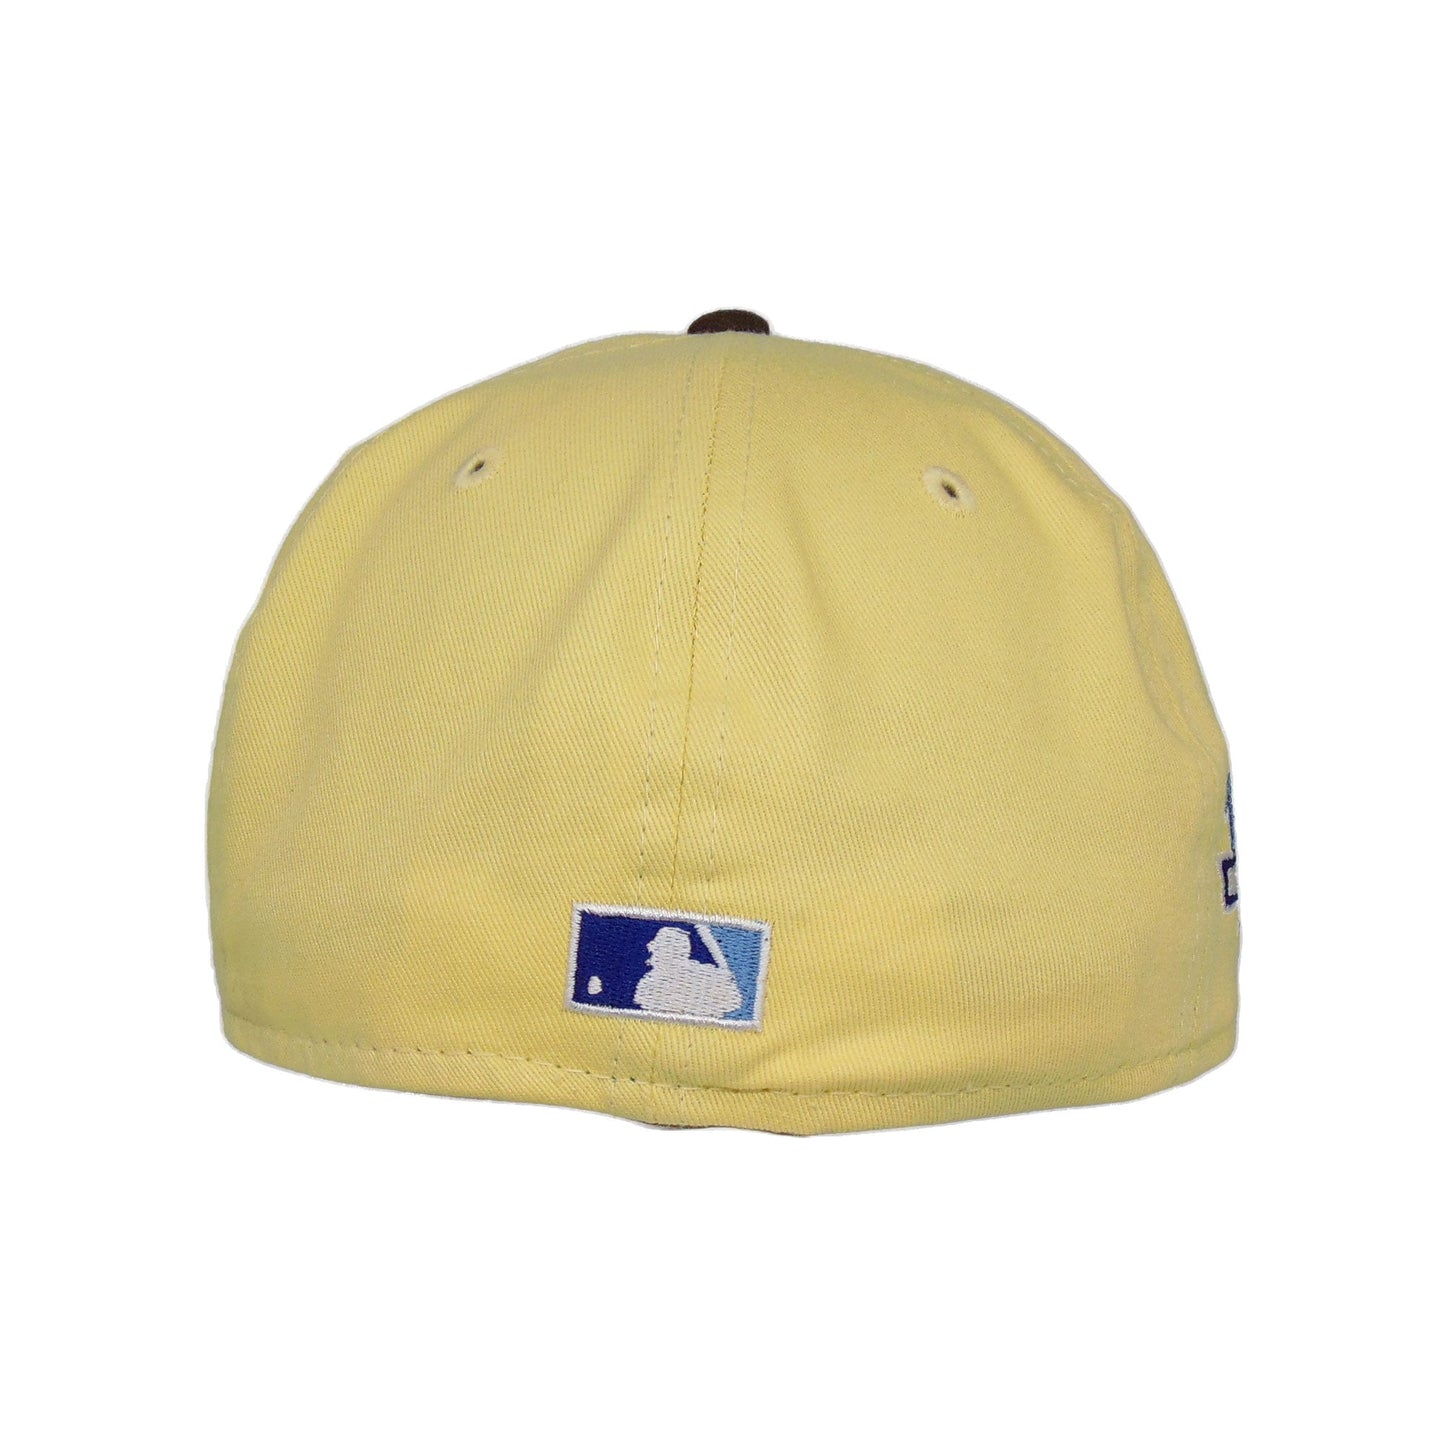 Oakland Athletics JF Custom New Era Cap Yellow Stomper WS89